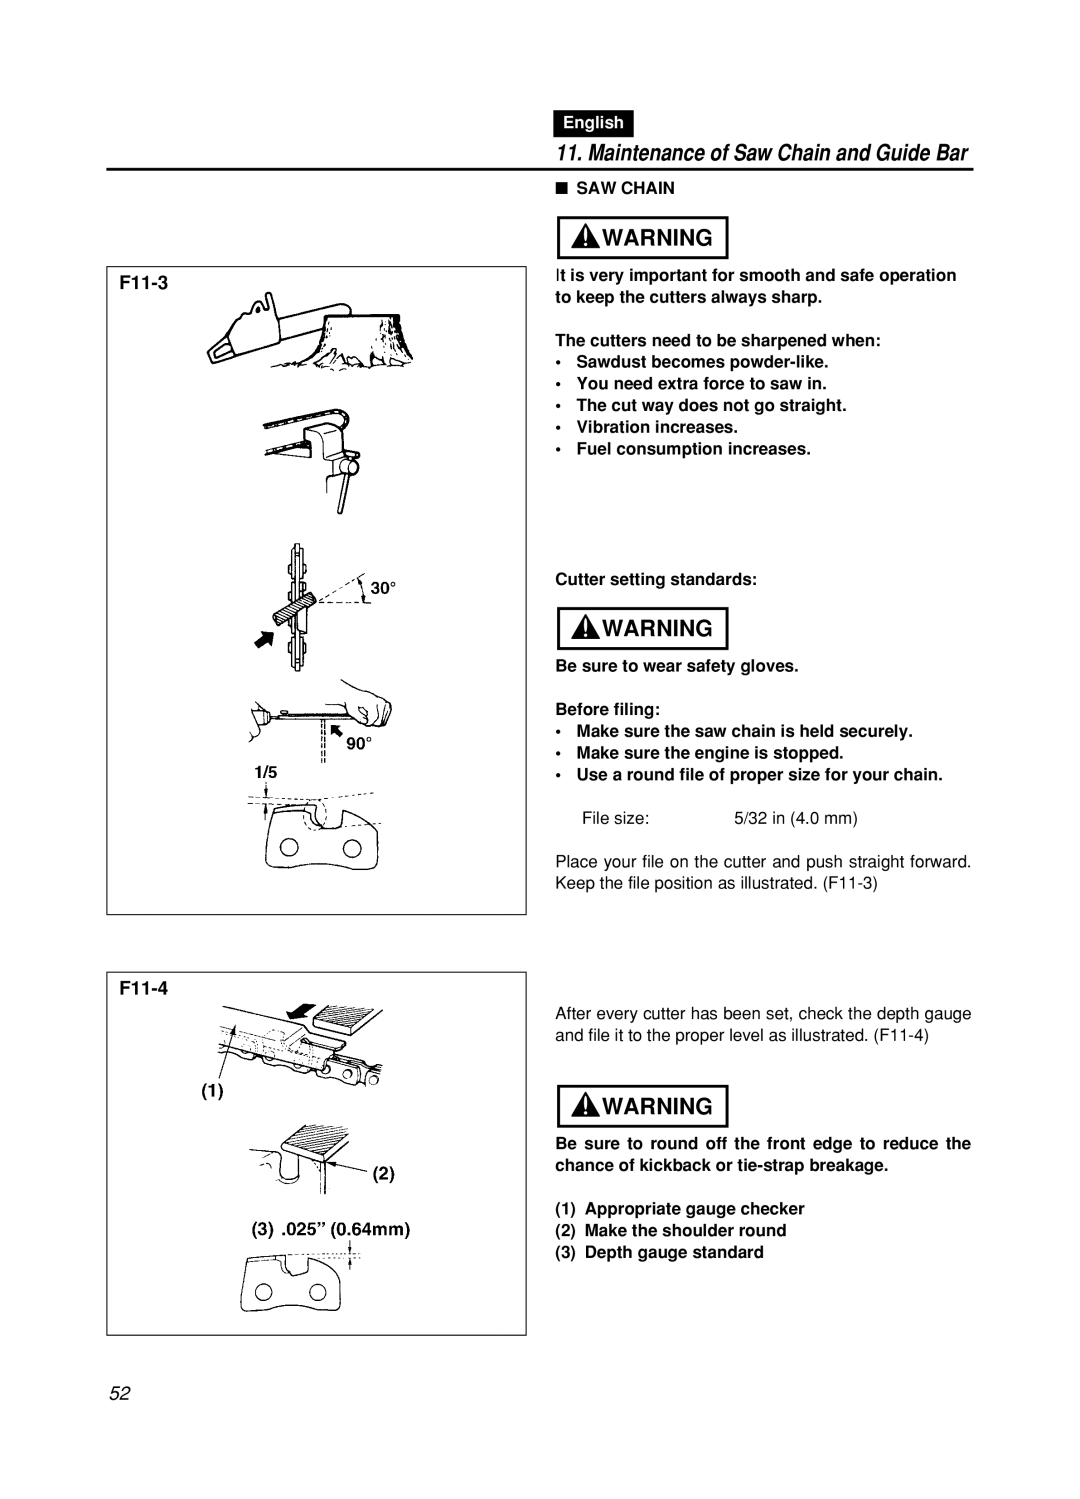 Zenoah GZ400 manual Maintenance of Saw Chain and Guide Bar, F11-3 F11-4, English 